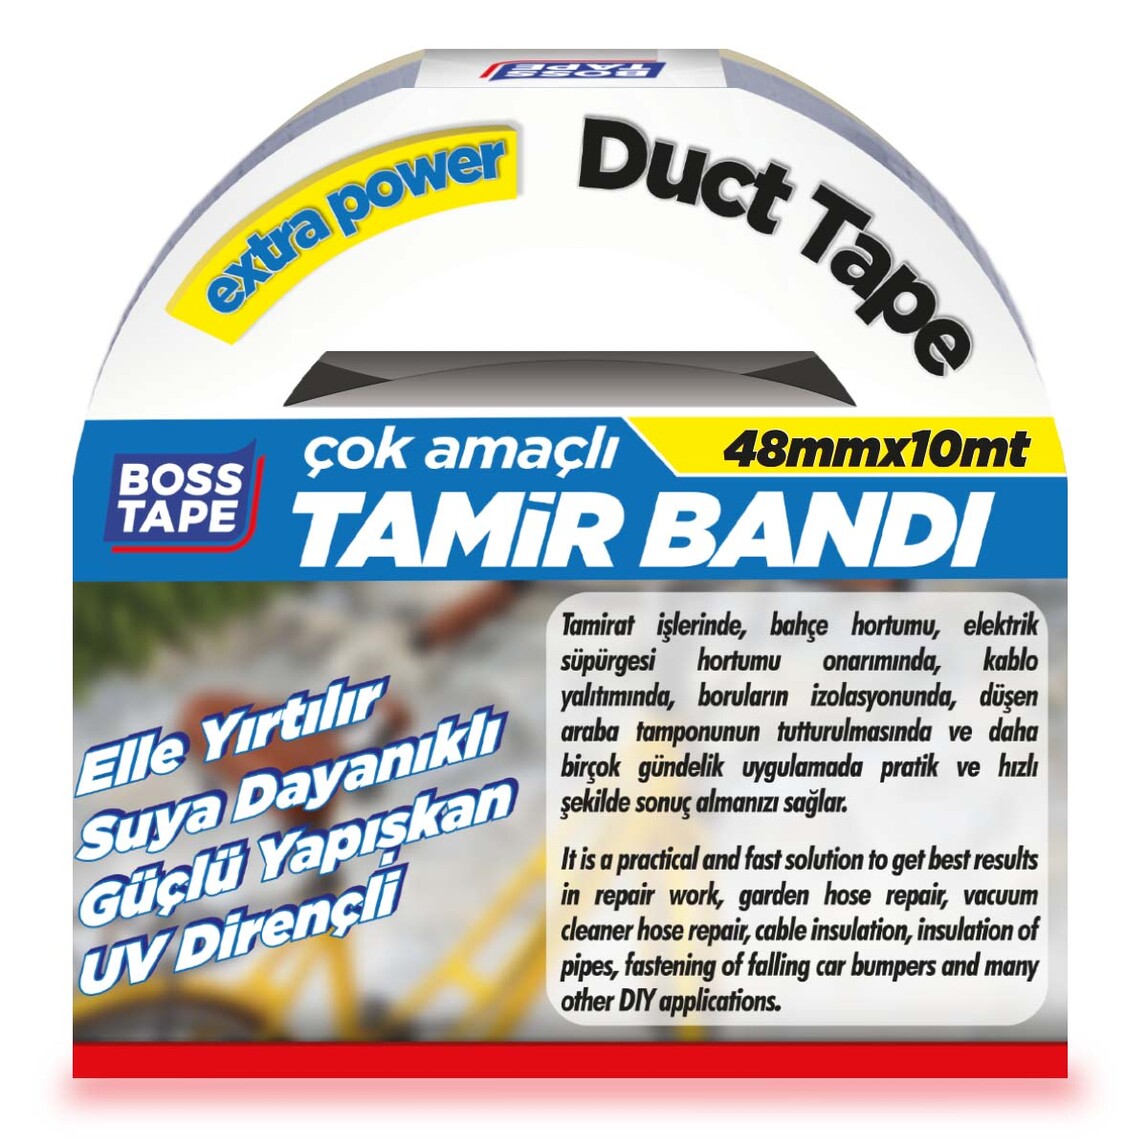    Boss Tape Gri Duck Tape Tamir Bandı  